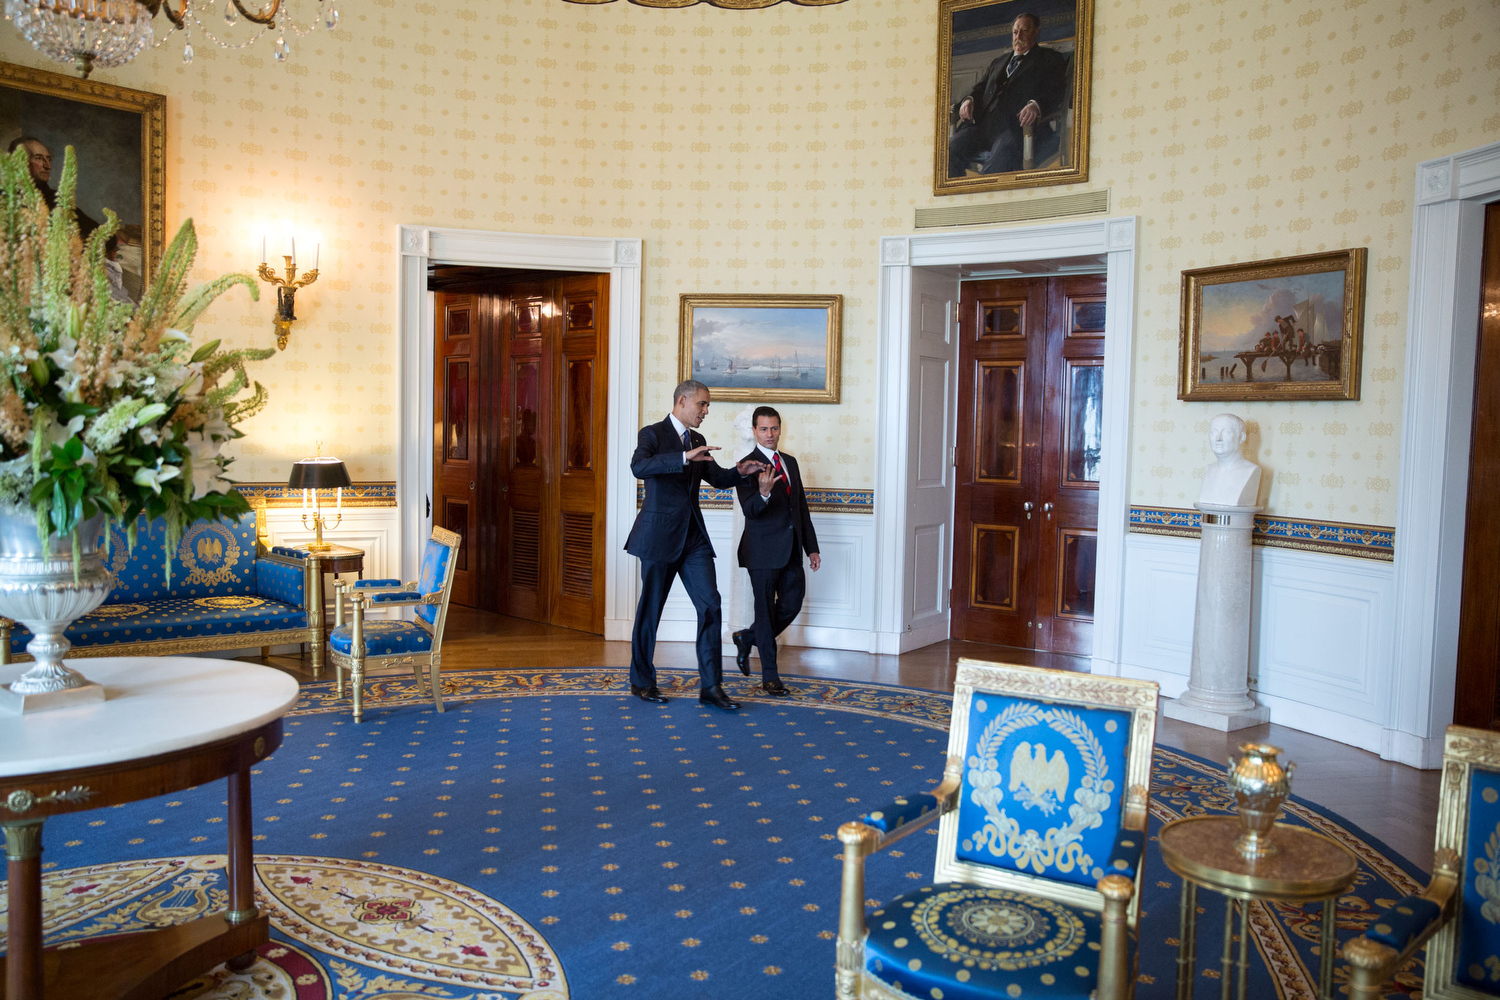 President Obama and President Nieto